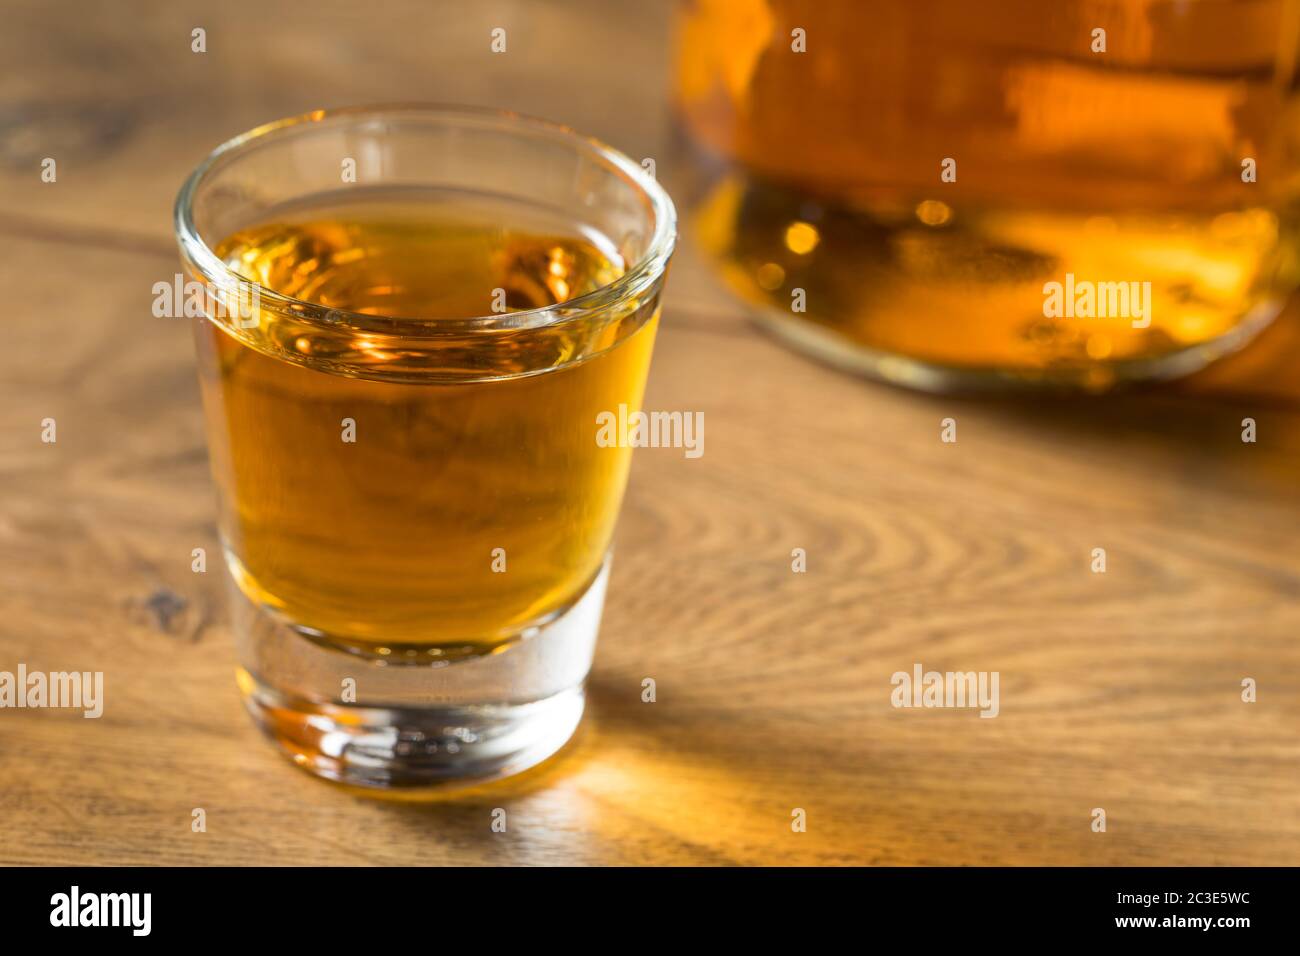 Boozy Alcoholic Rum Shots Ready to Drink Stock Photo